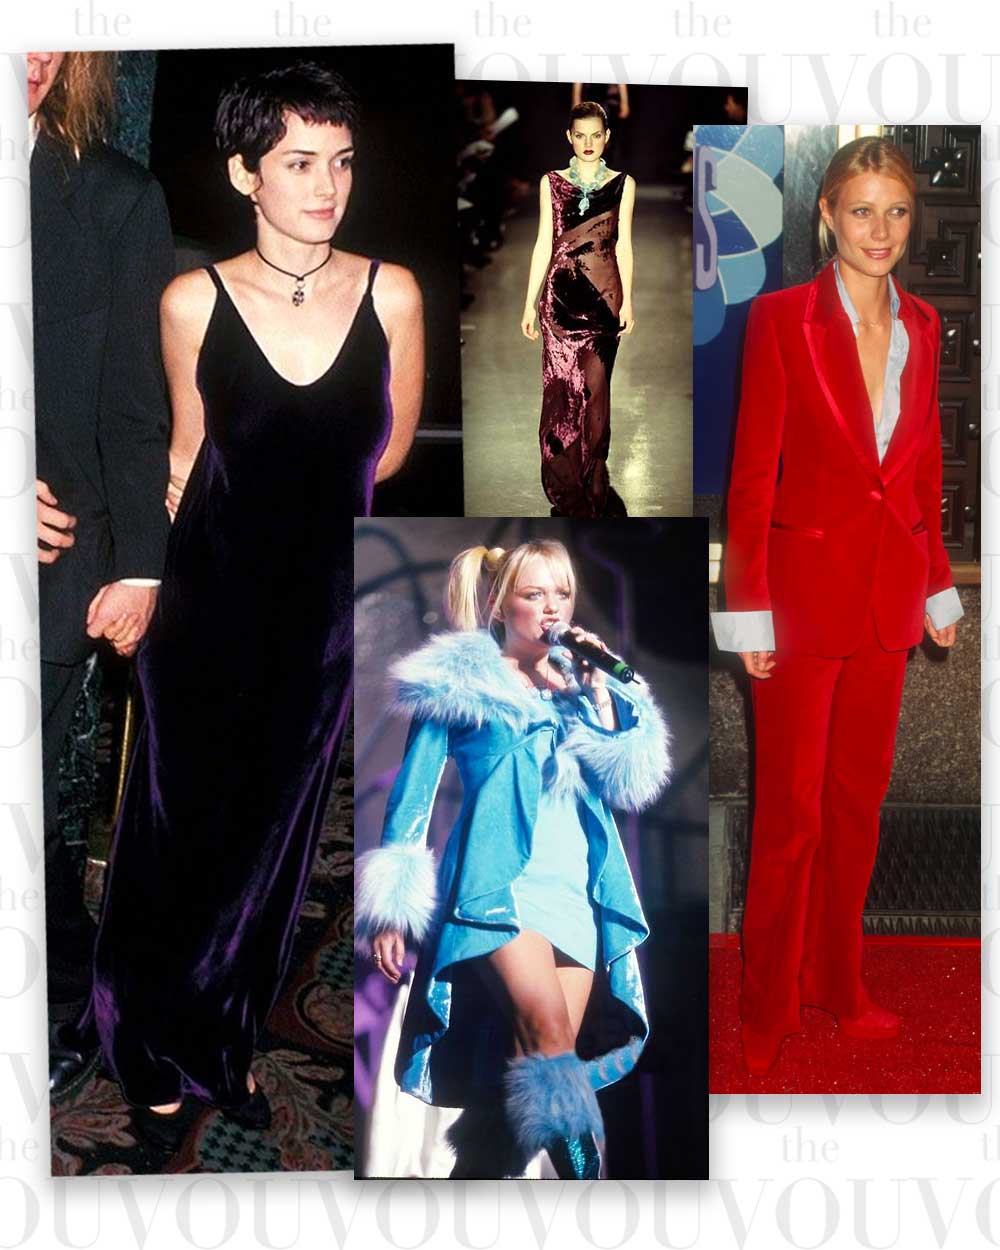 Velvets in 90s Fashion - 1990s fashion, nineties fashion, ninety decade fashion